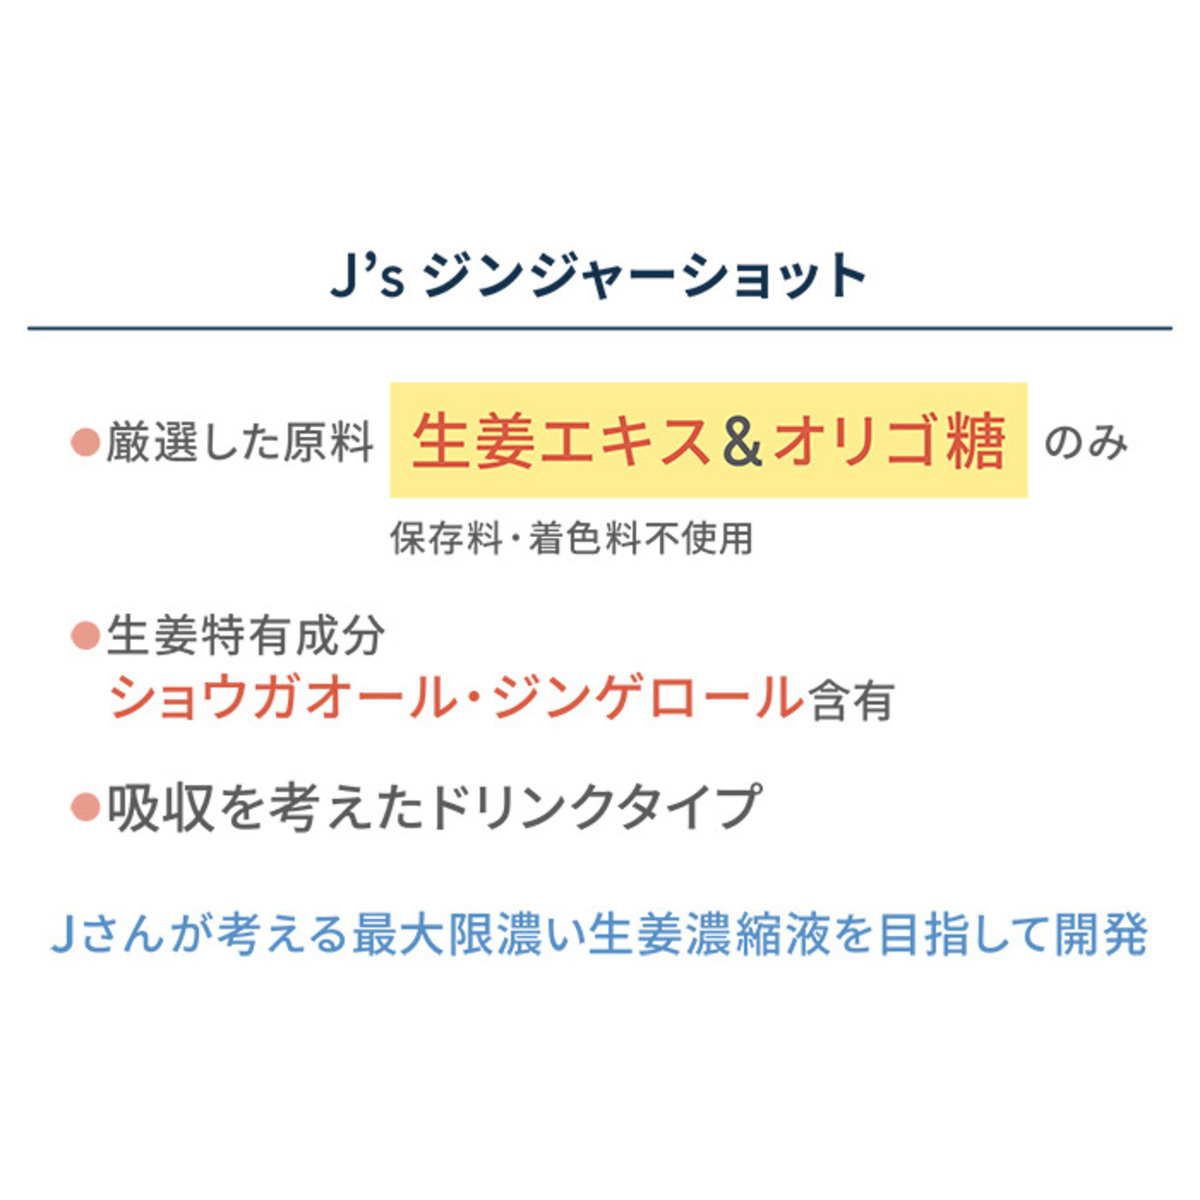 J’s ジンジャーショット30本 - QVC.jp